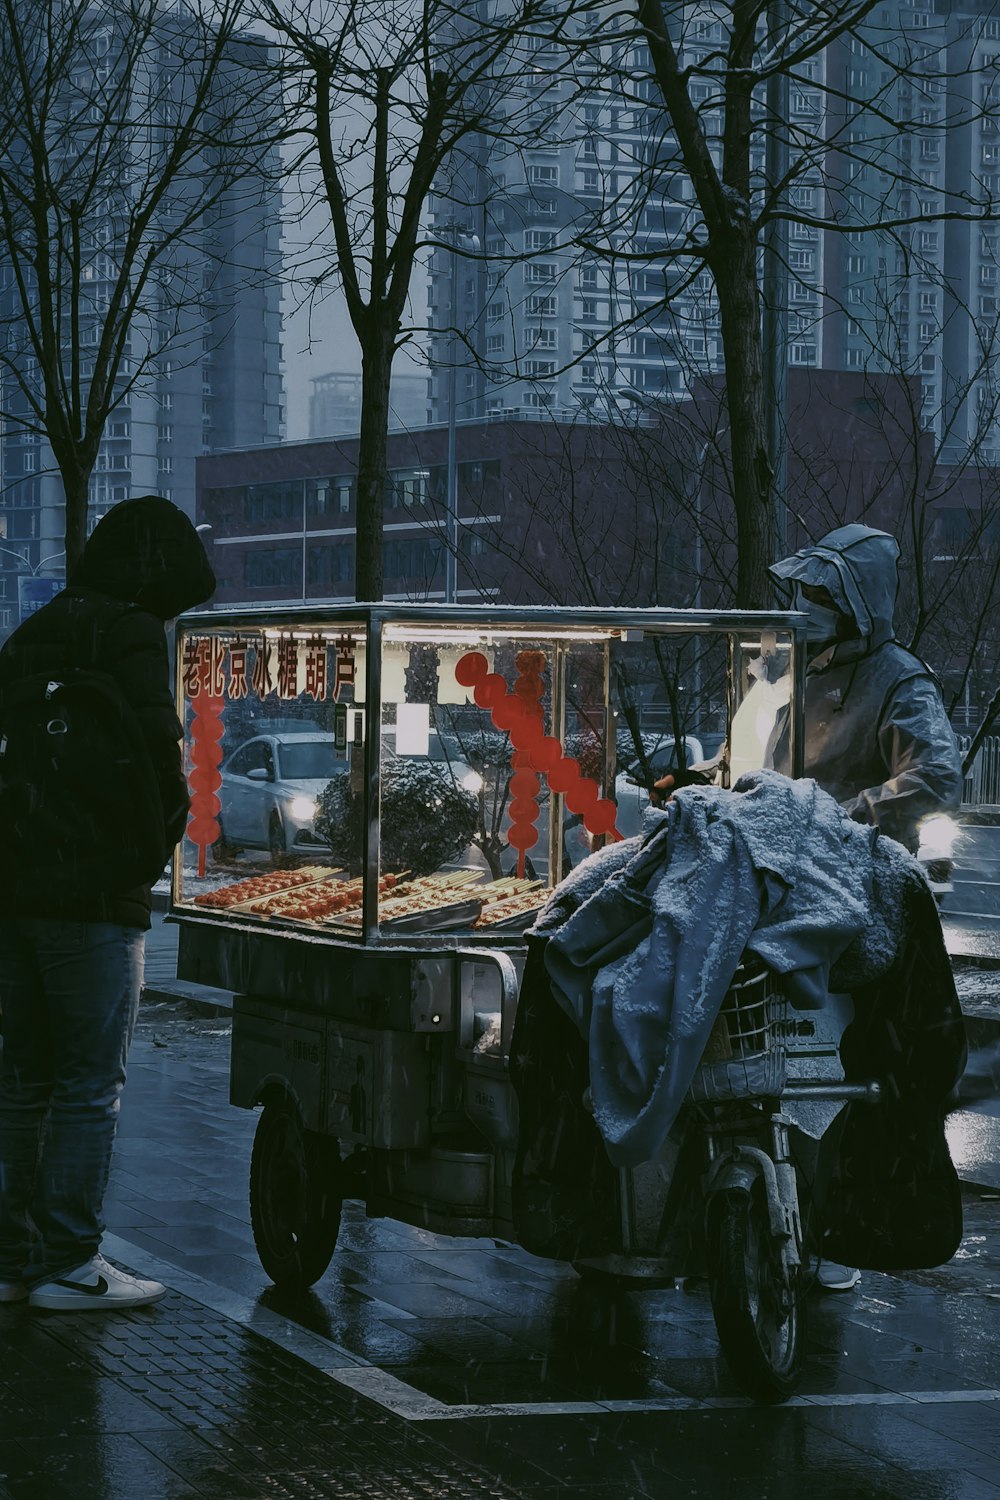 a man standing next to a food cart on a street